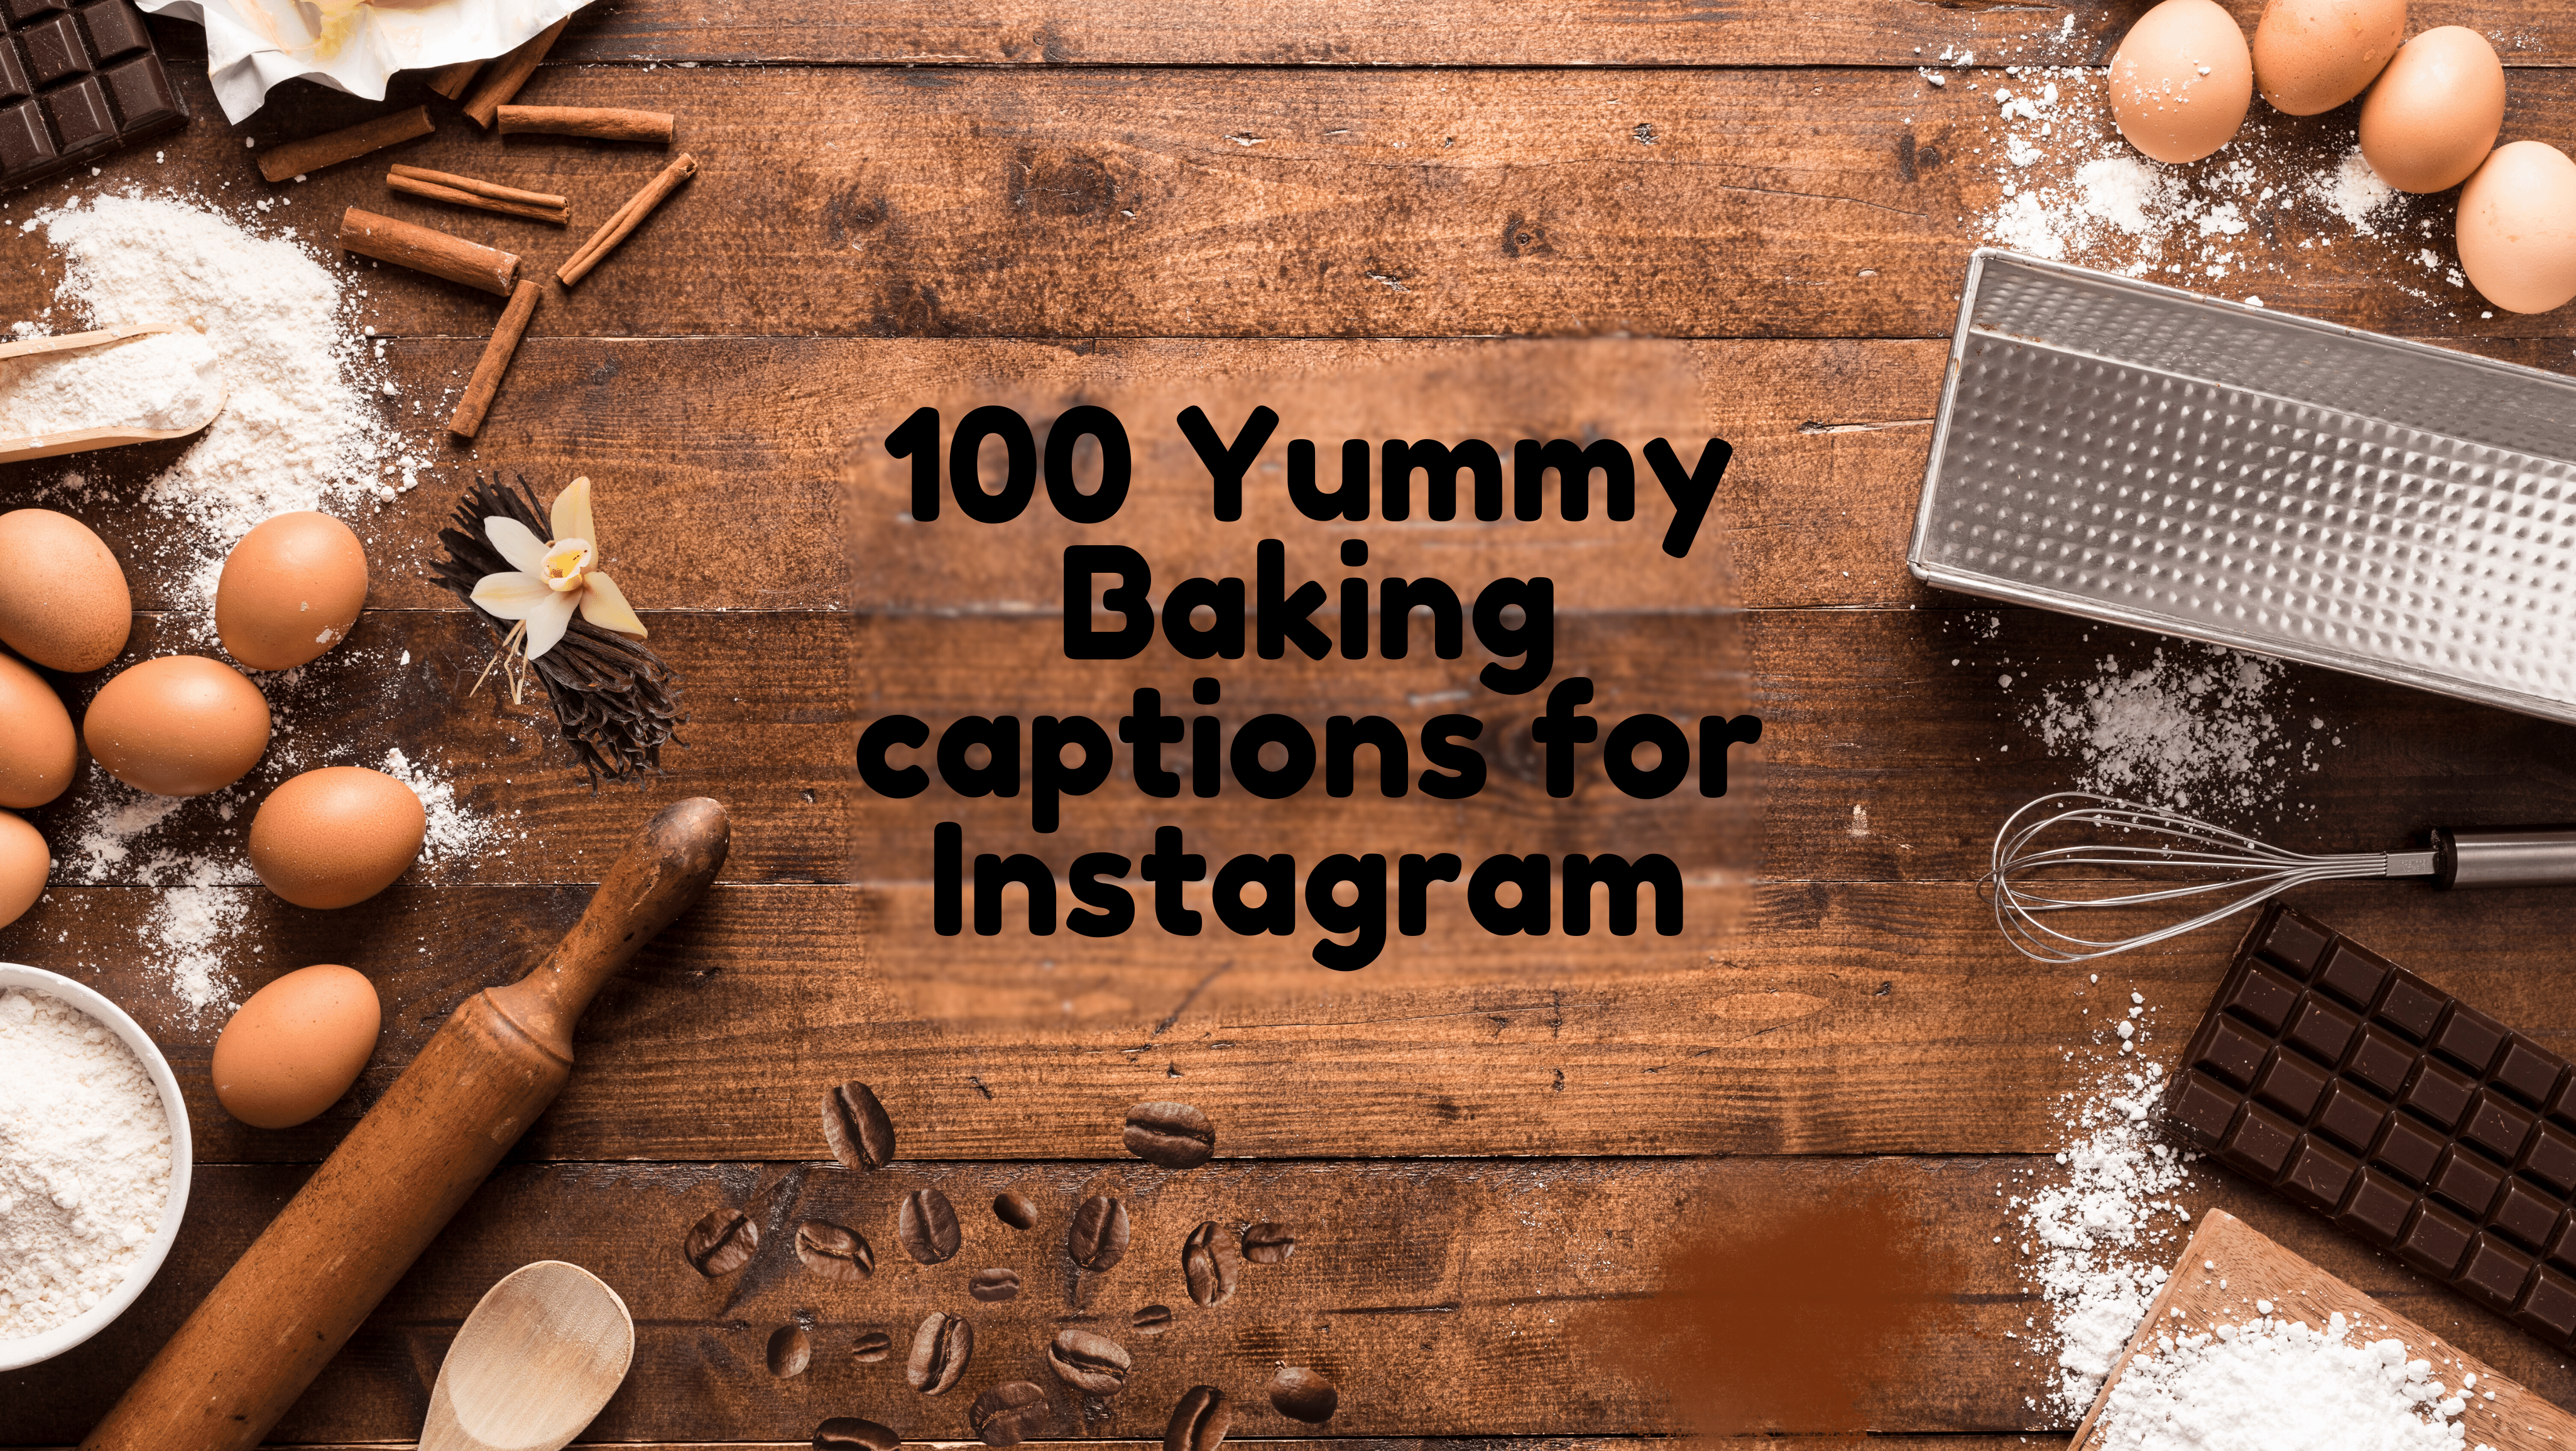 Baking captions for Instagram